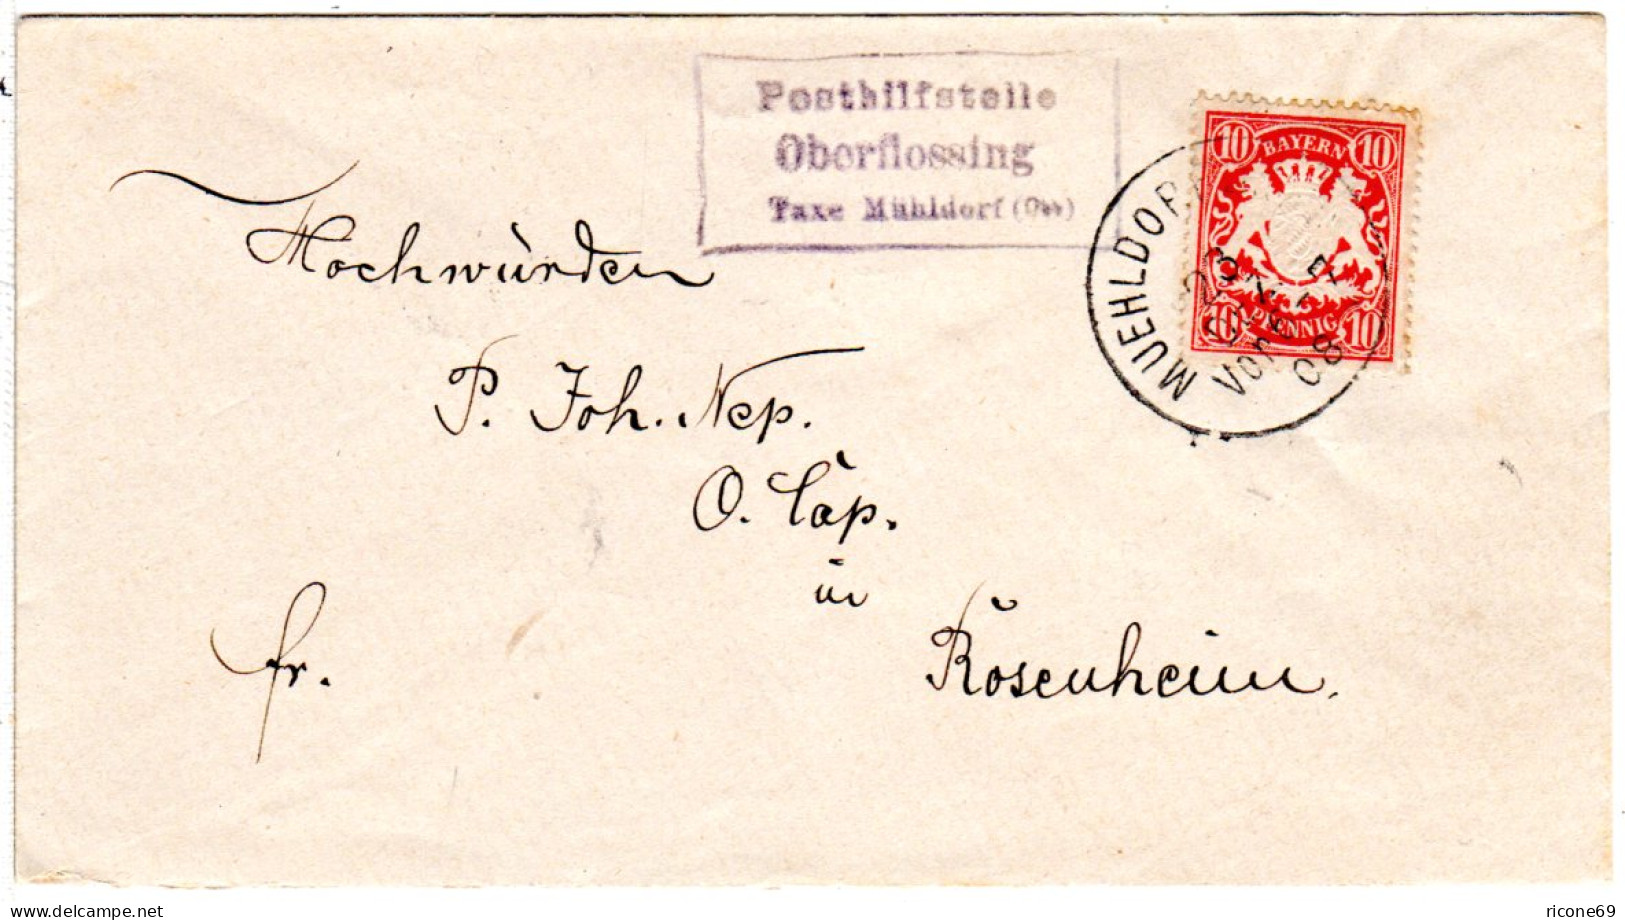 Bayern 1908, Posthilfstelle OBERFLOSSING Taxe Mühldorf Auf Brief M. 10 Pf. - Covers & Documents